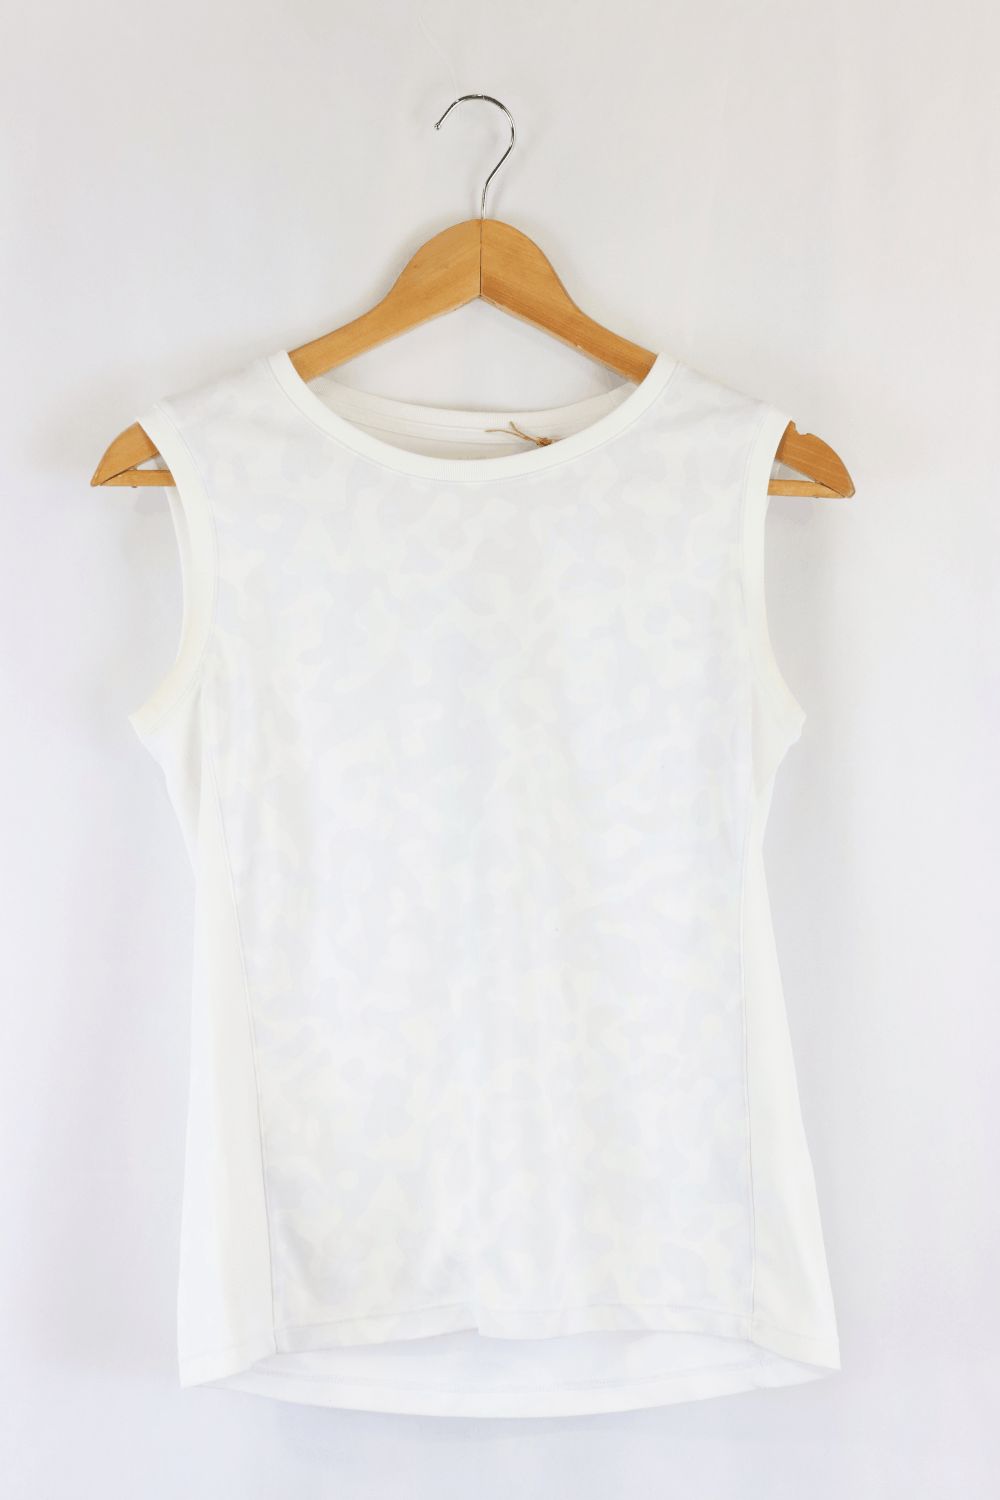 Uniqlo White Top S - Reluv Clothing Australia